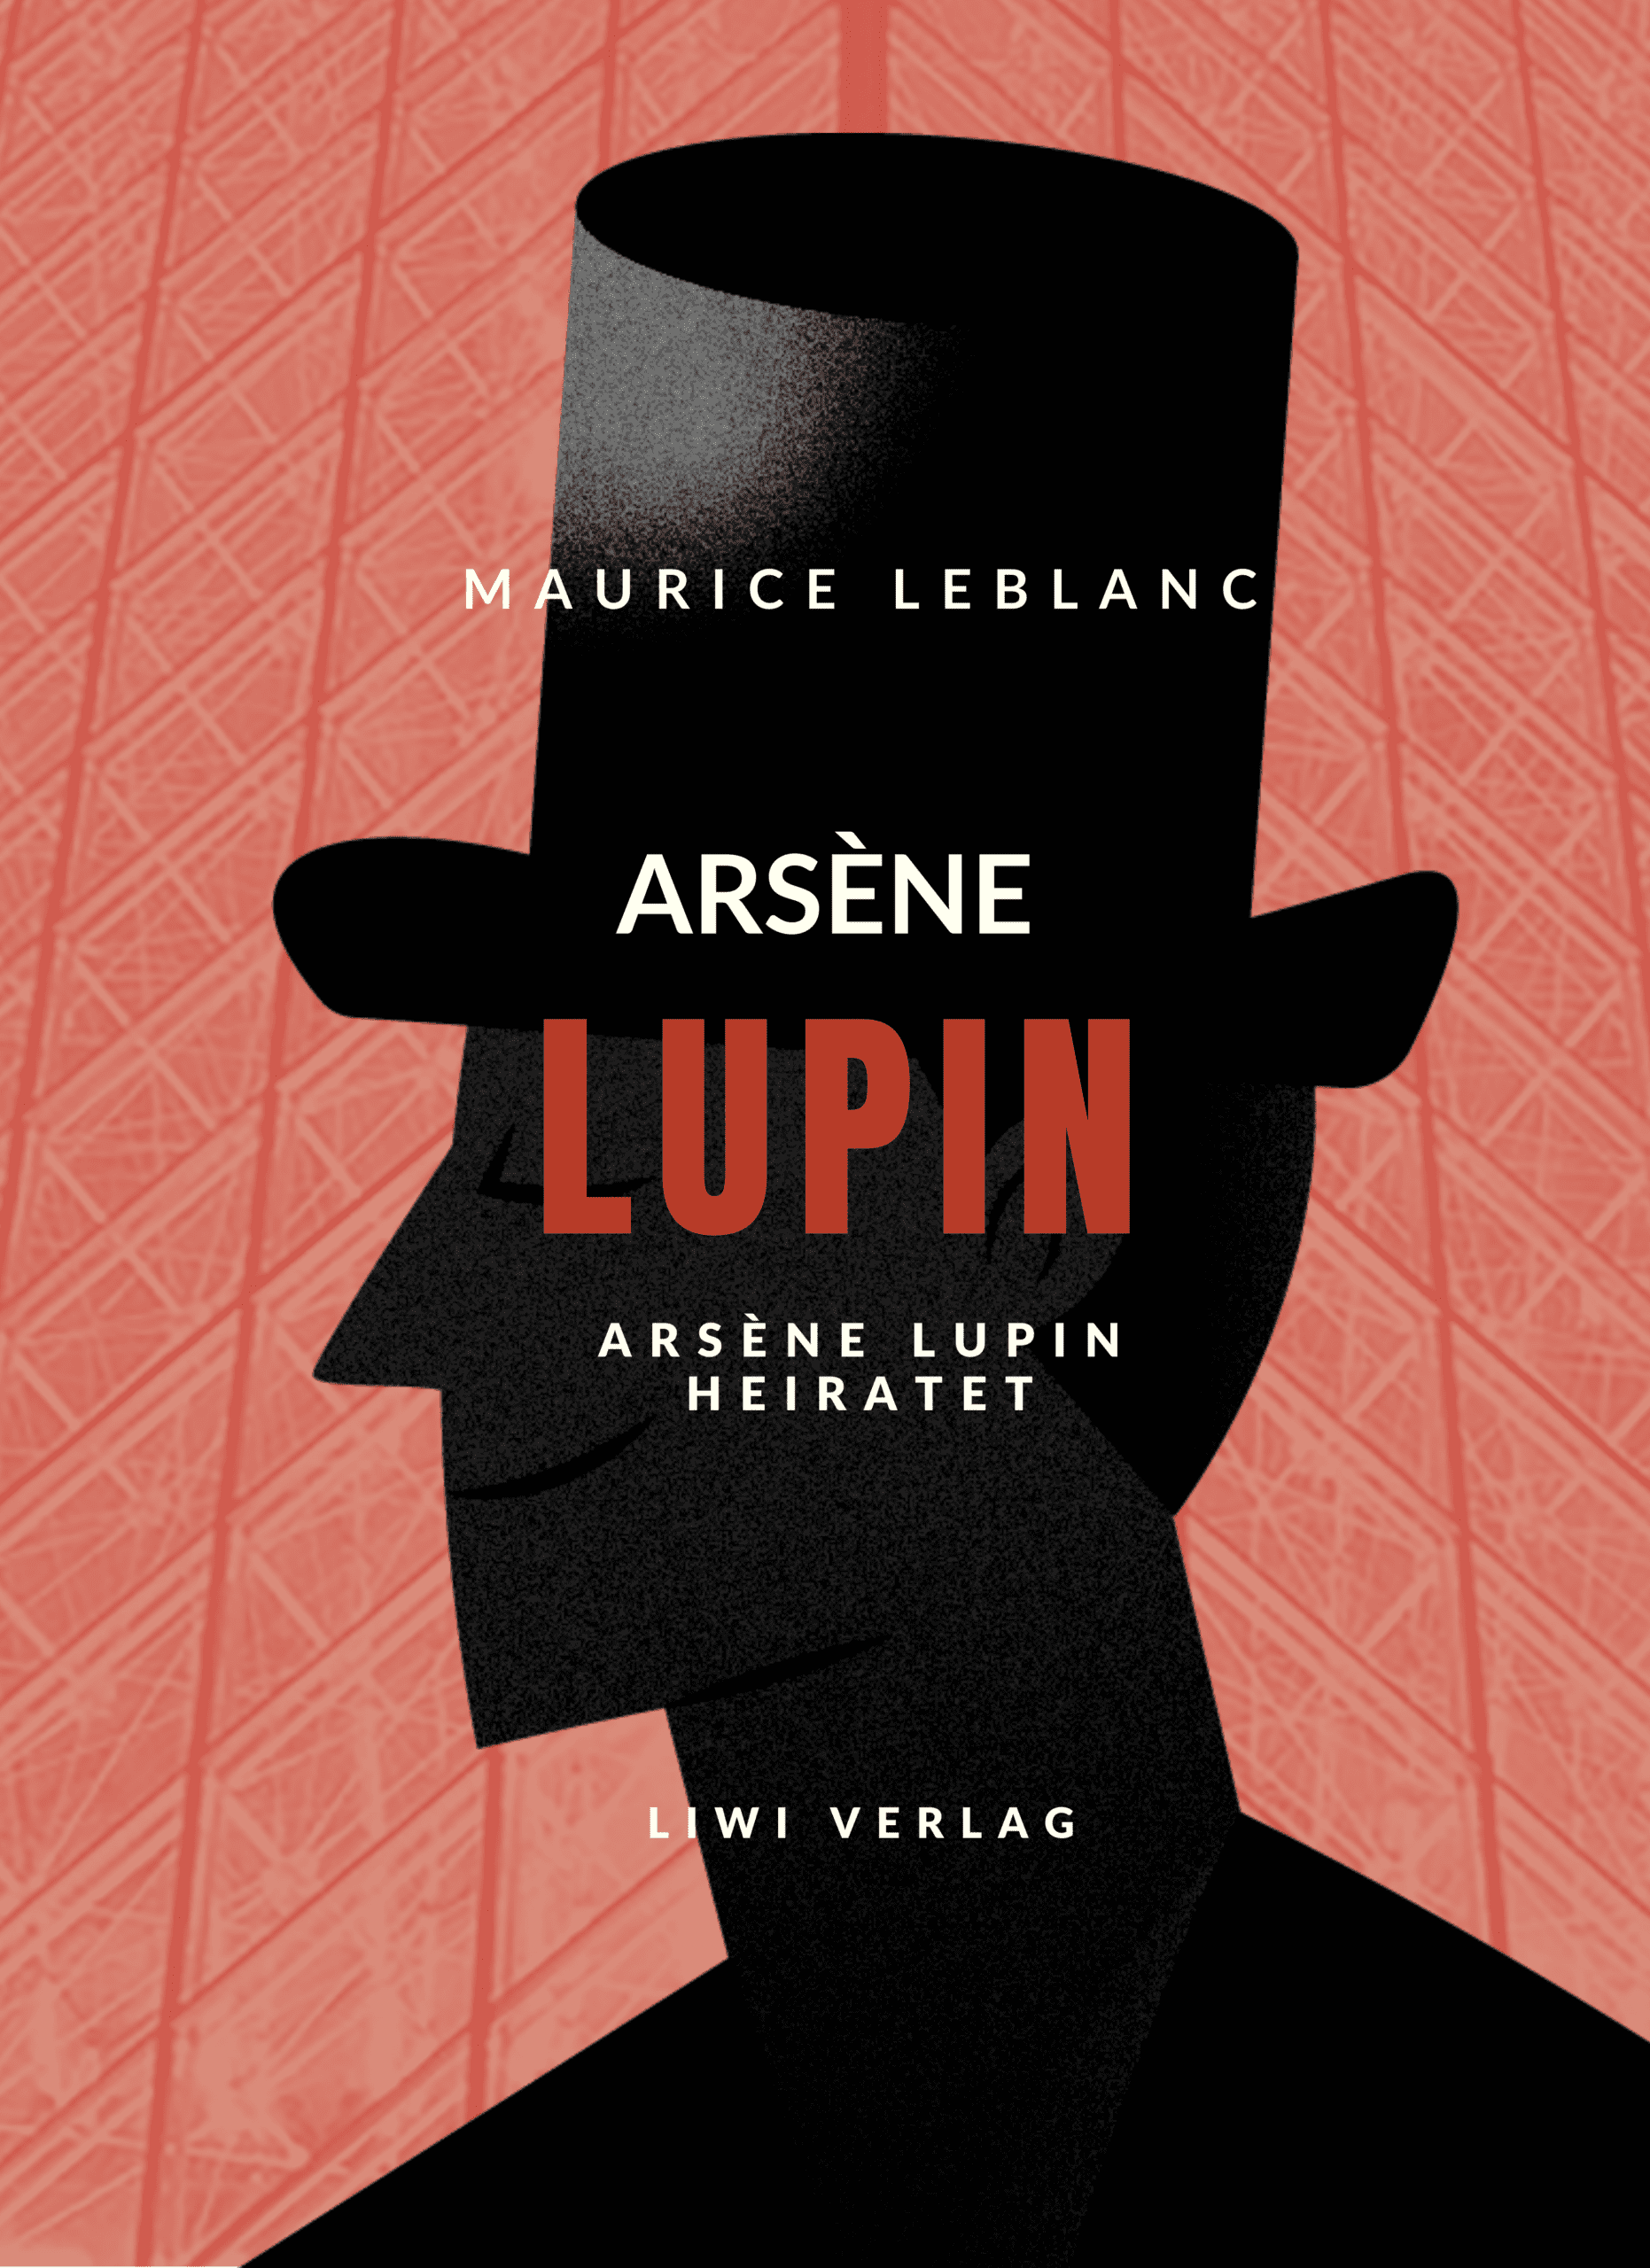 Maurice Leblanc - Arsène Lupin heiratet gentleman thief